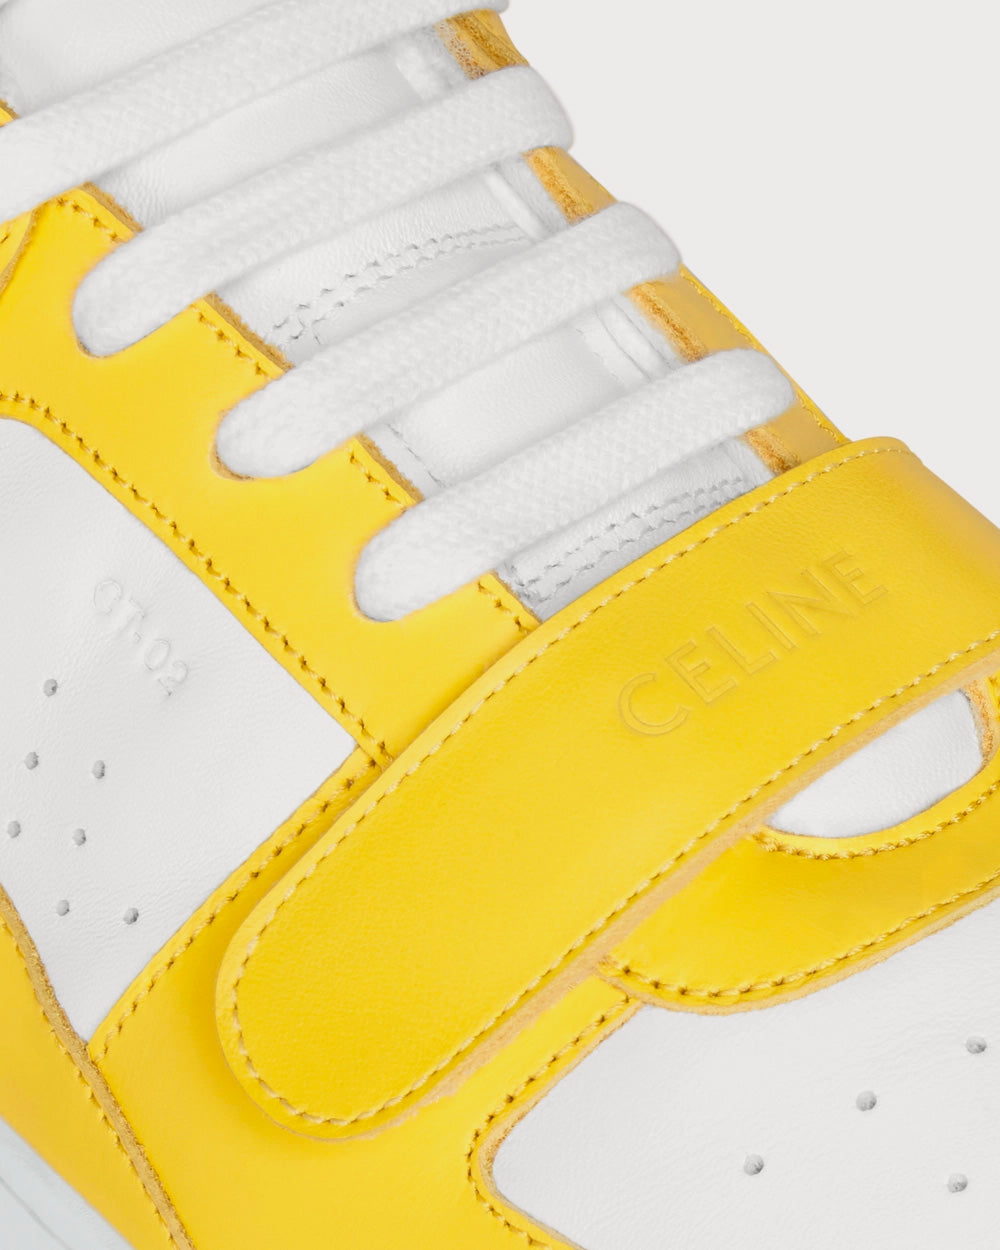 Celine - CT-02 Optic White / Bright Yellow Mid Top Sneakers